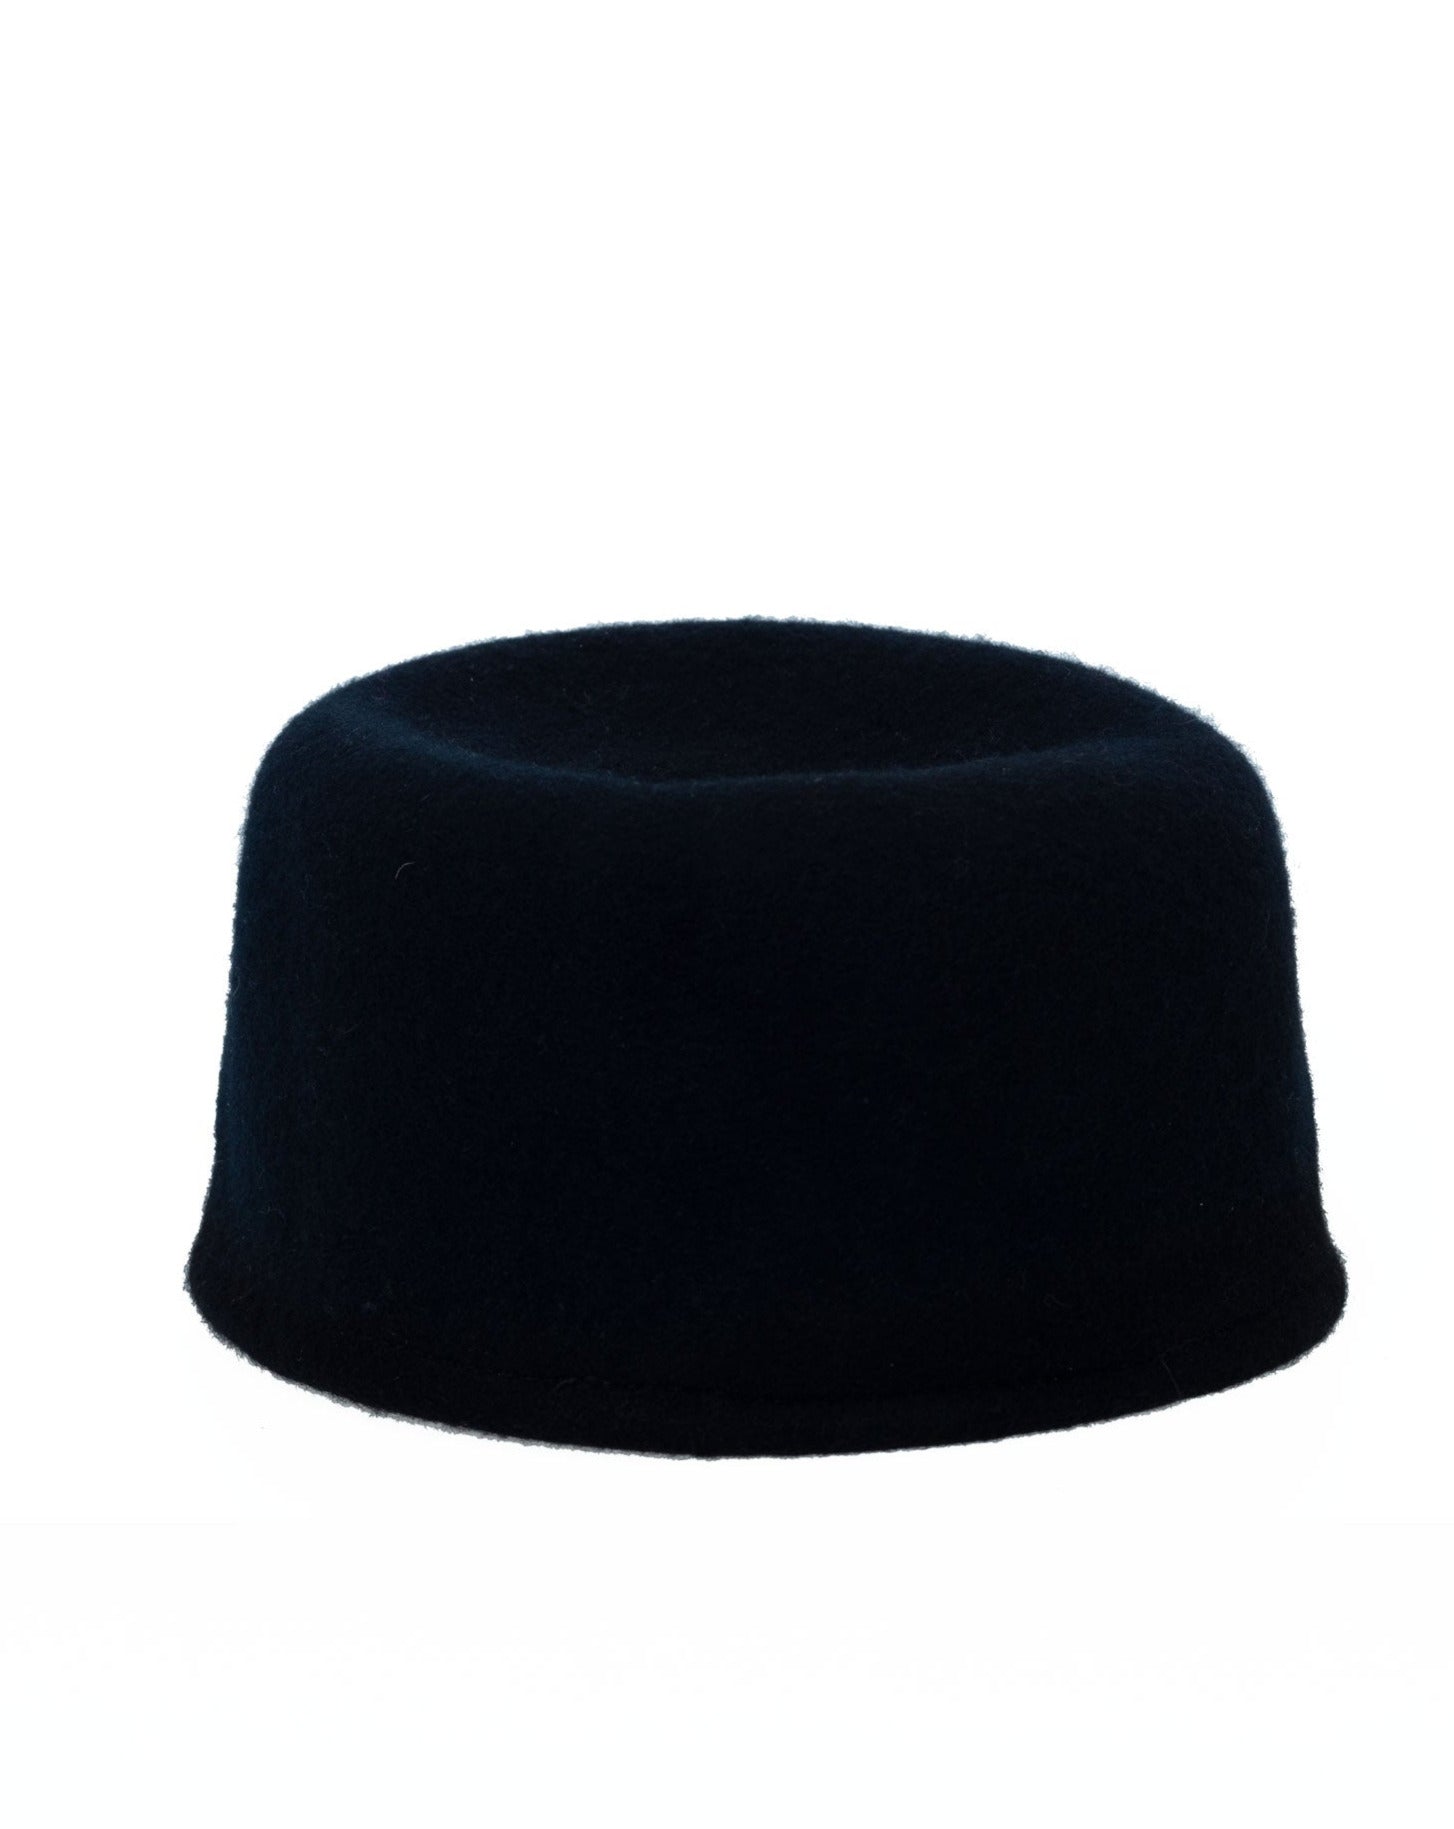 Janelle Modular Pillbox Hat in Black Felt